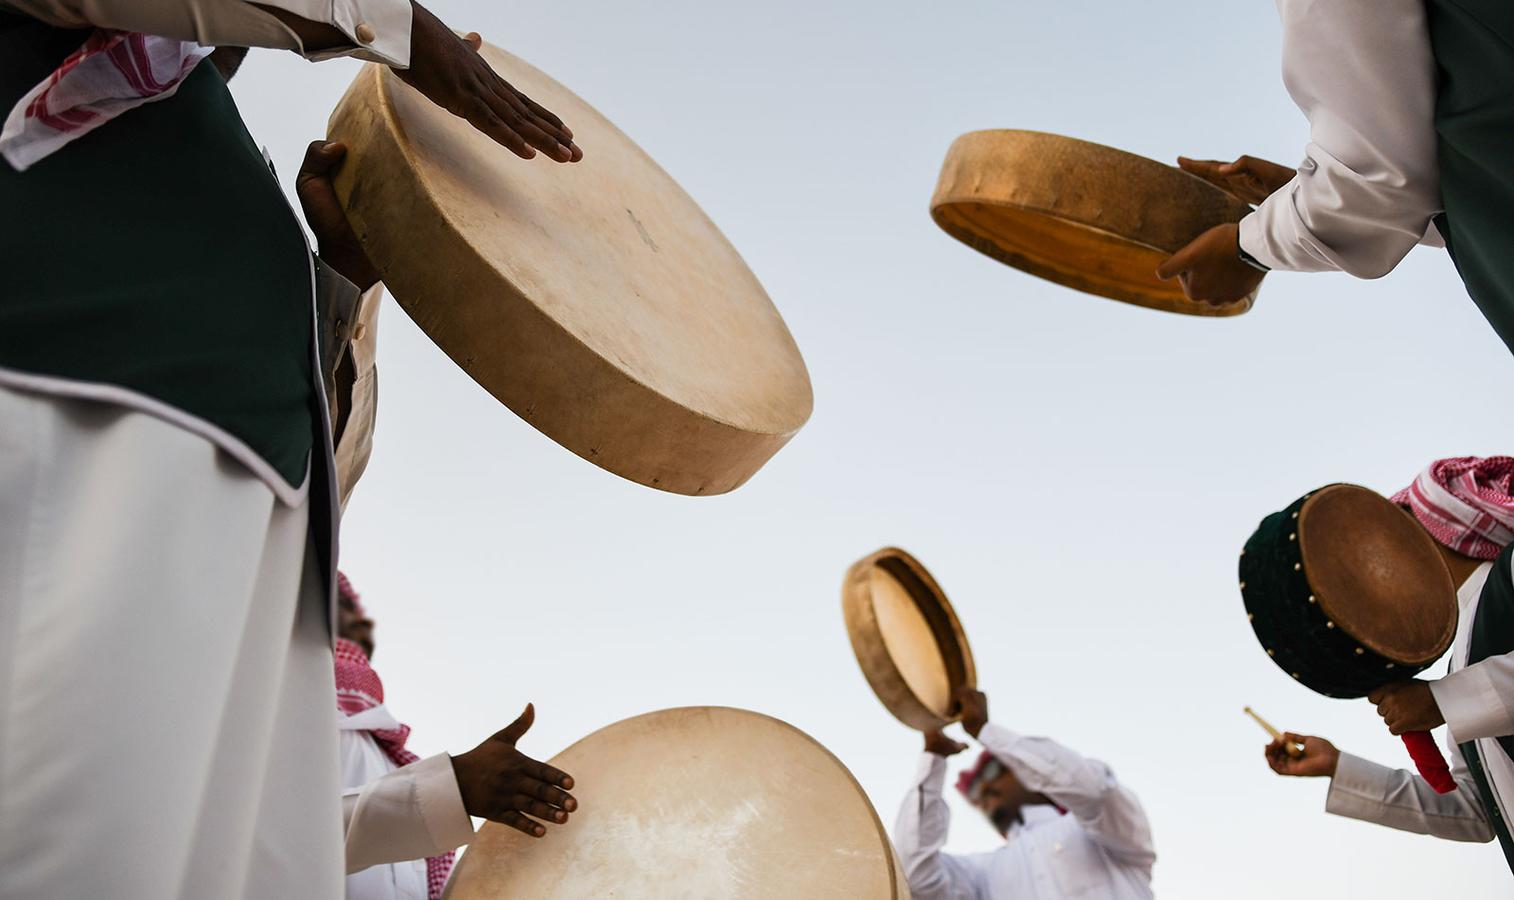 Riyadh, Saudi Arabia: Janadriah Festival. A group of men perform a traditional Saudi Arabian dance and singing (Image Source: Shutterstock)